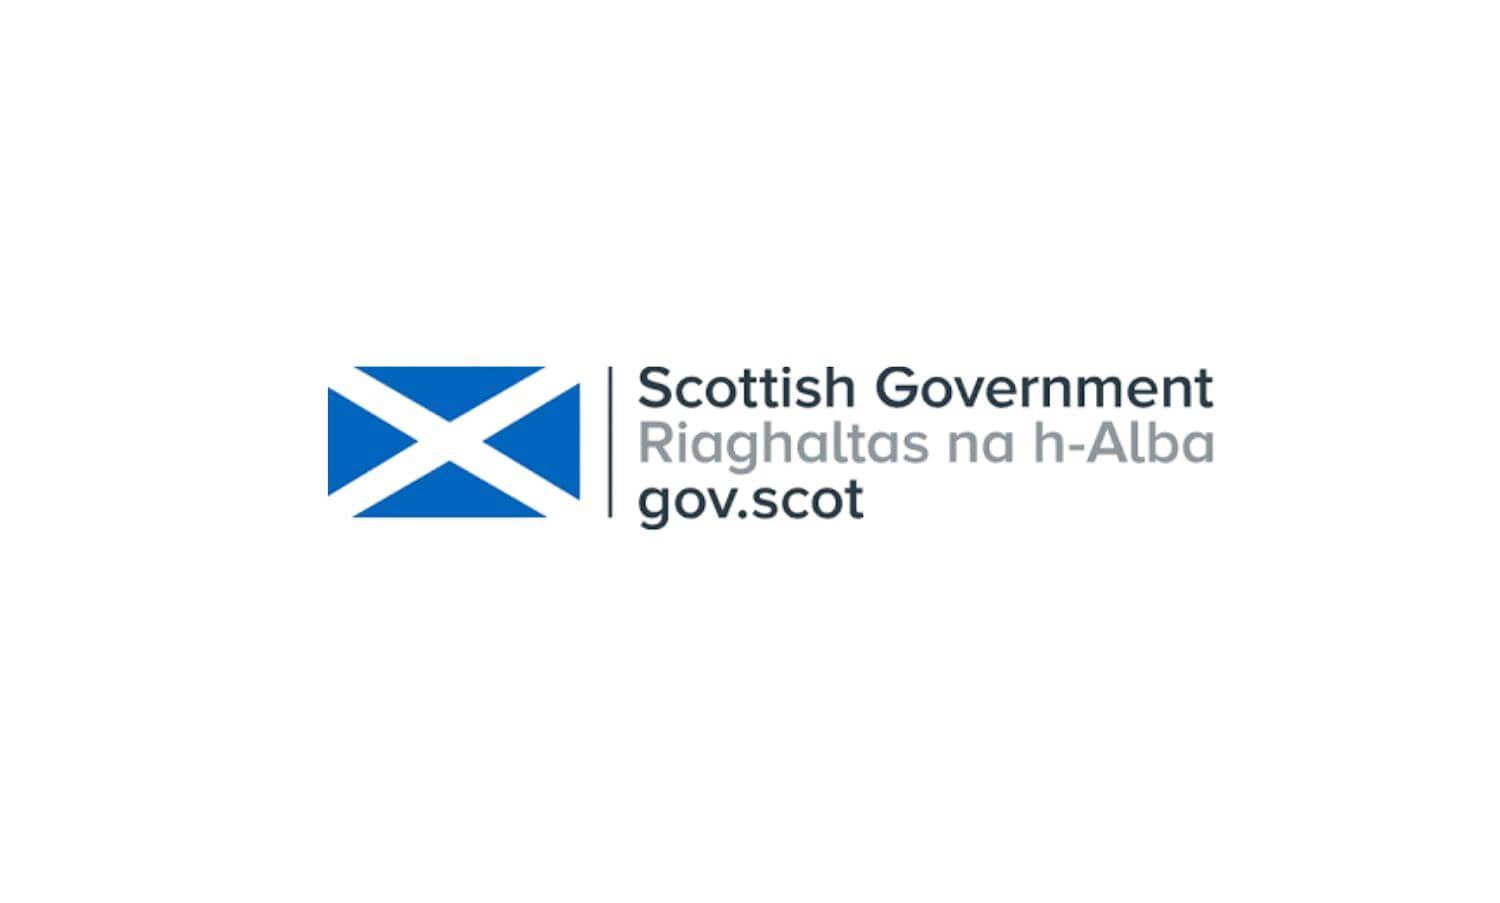 Scottish Government logo with Saltire Flag